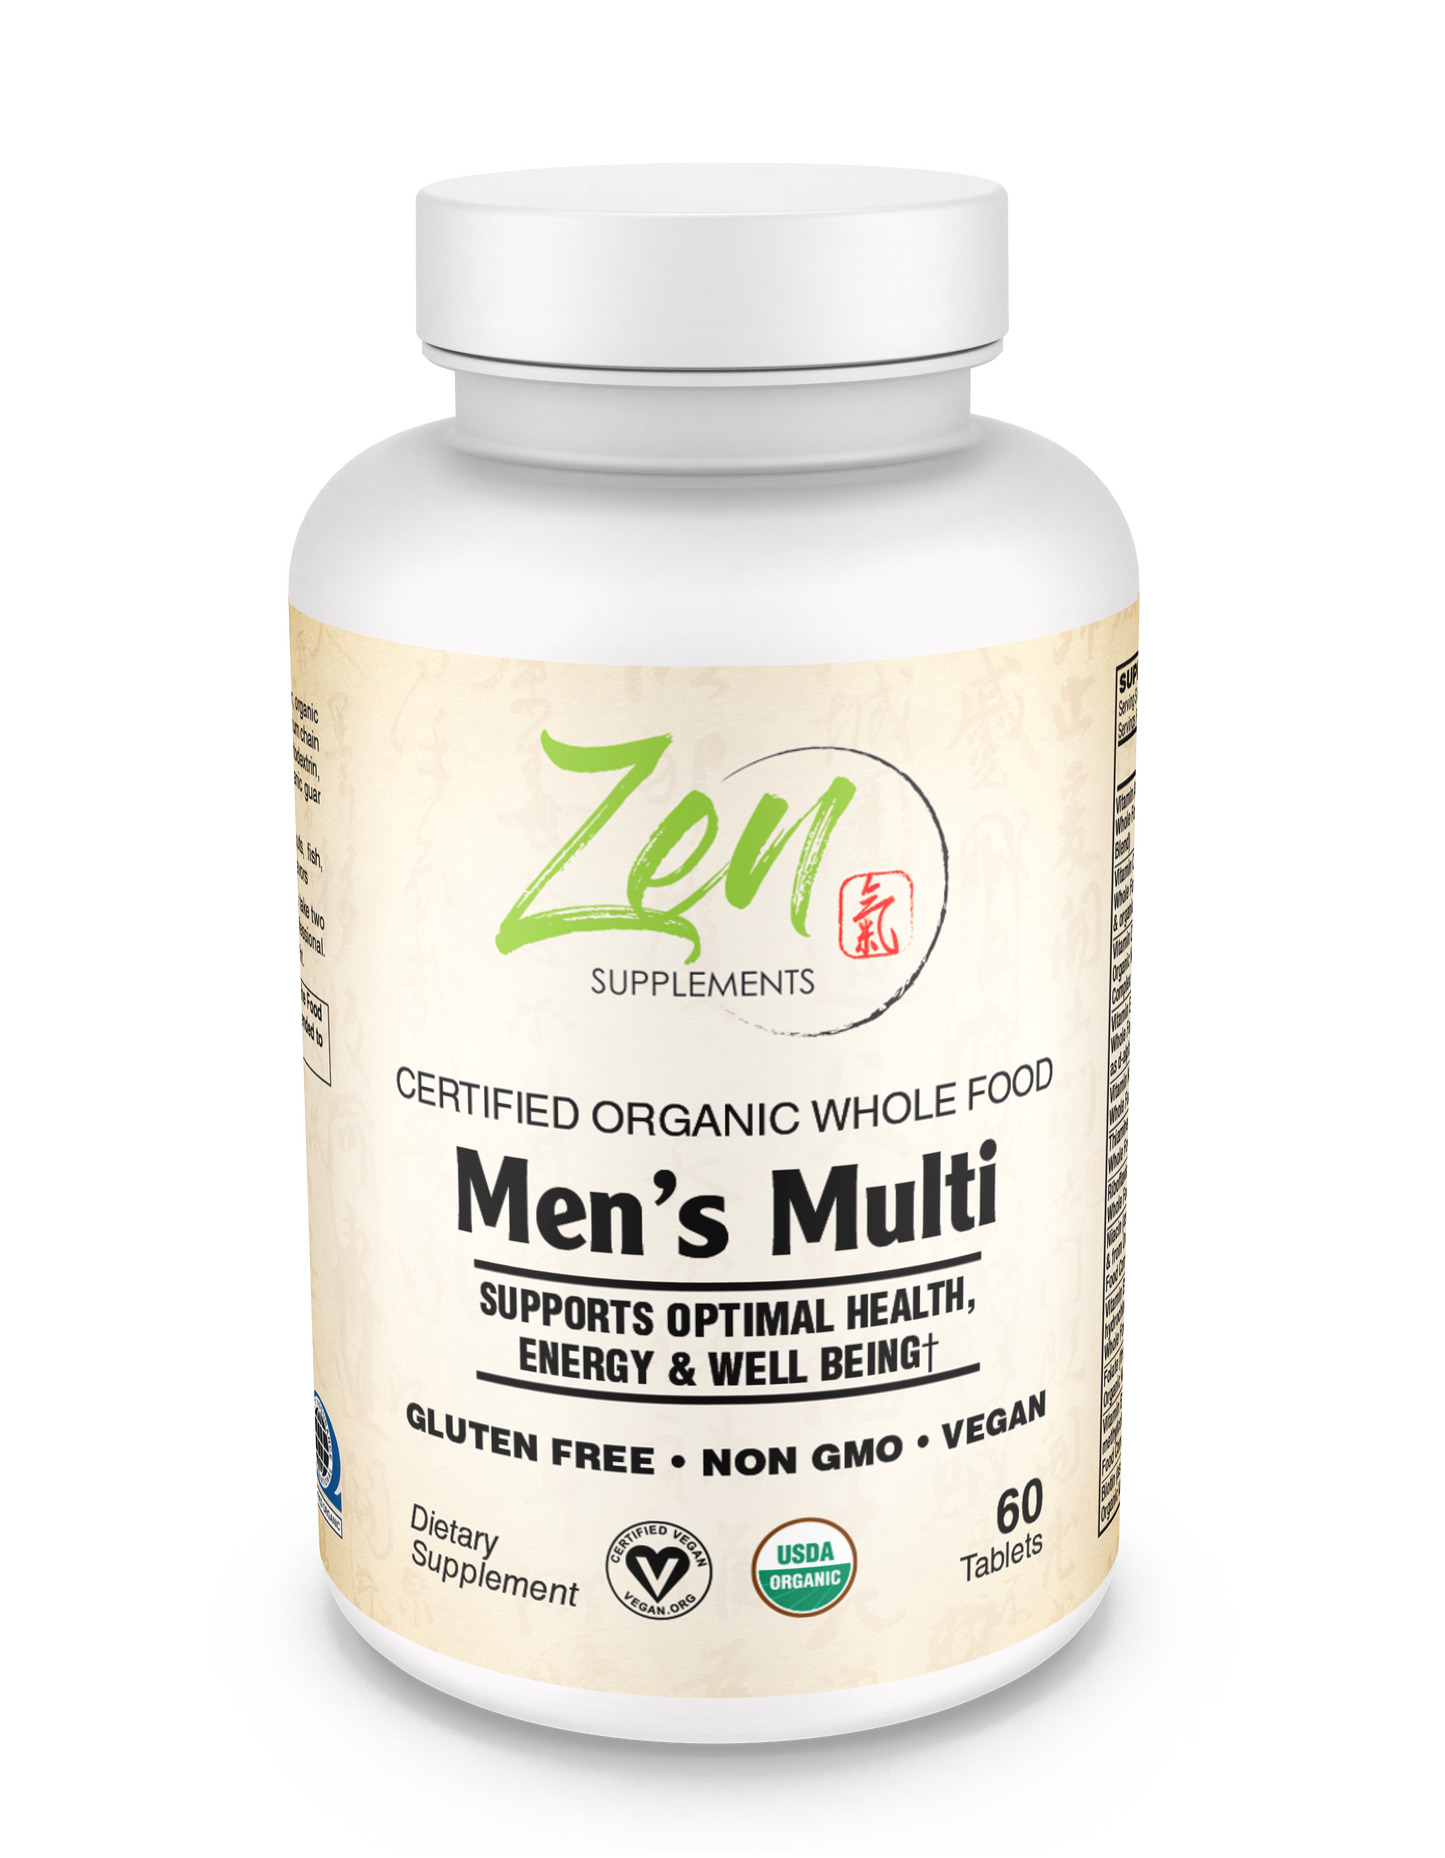 Organic Whole Food Men's Multivitamin 60 TAB